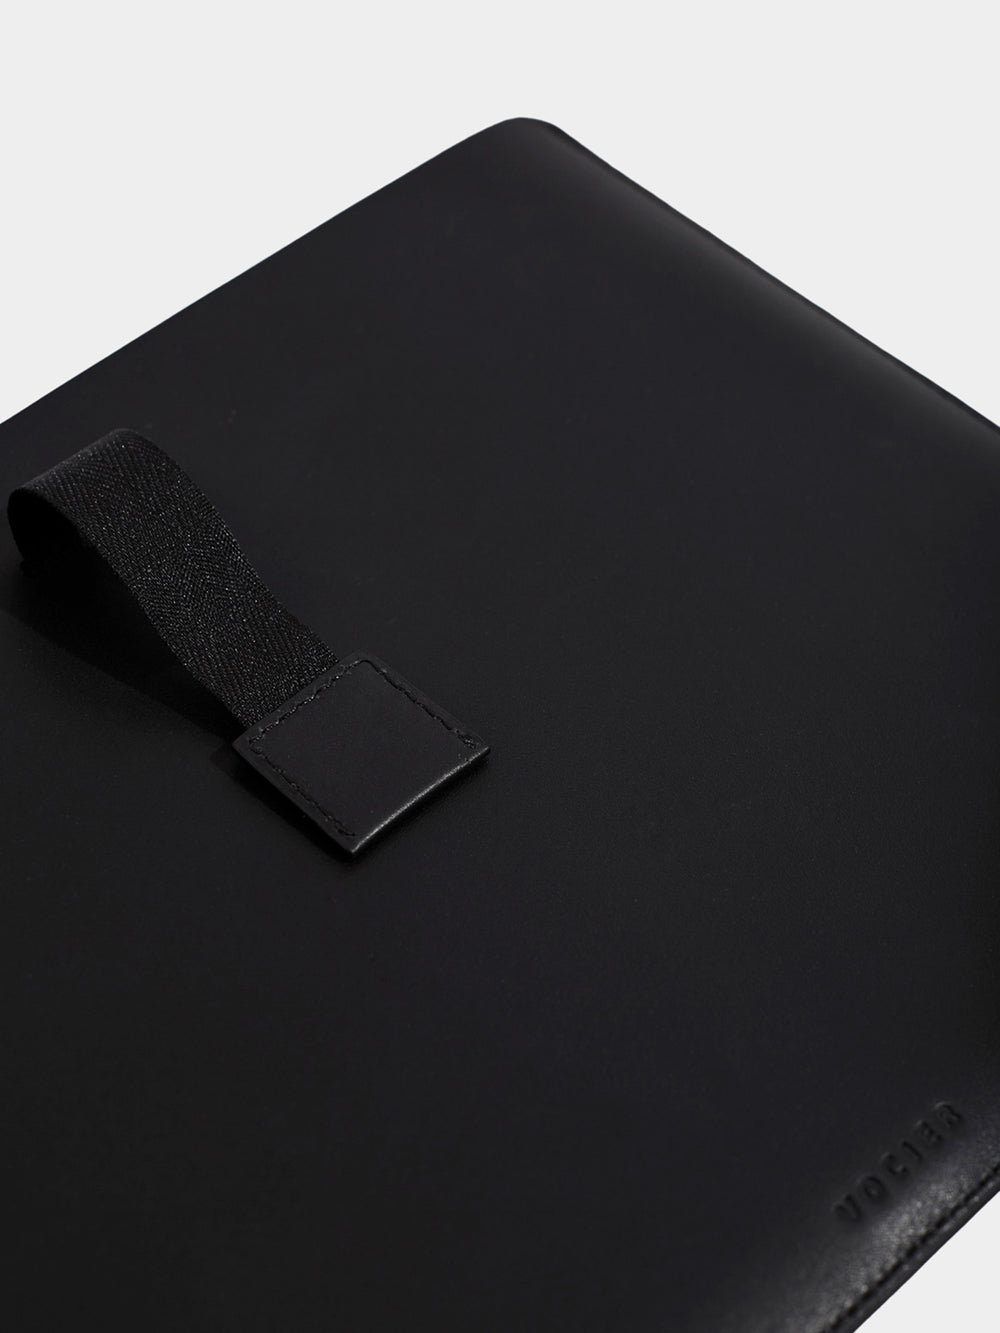 ipad cover small black leather schwarzes leder